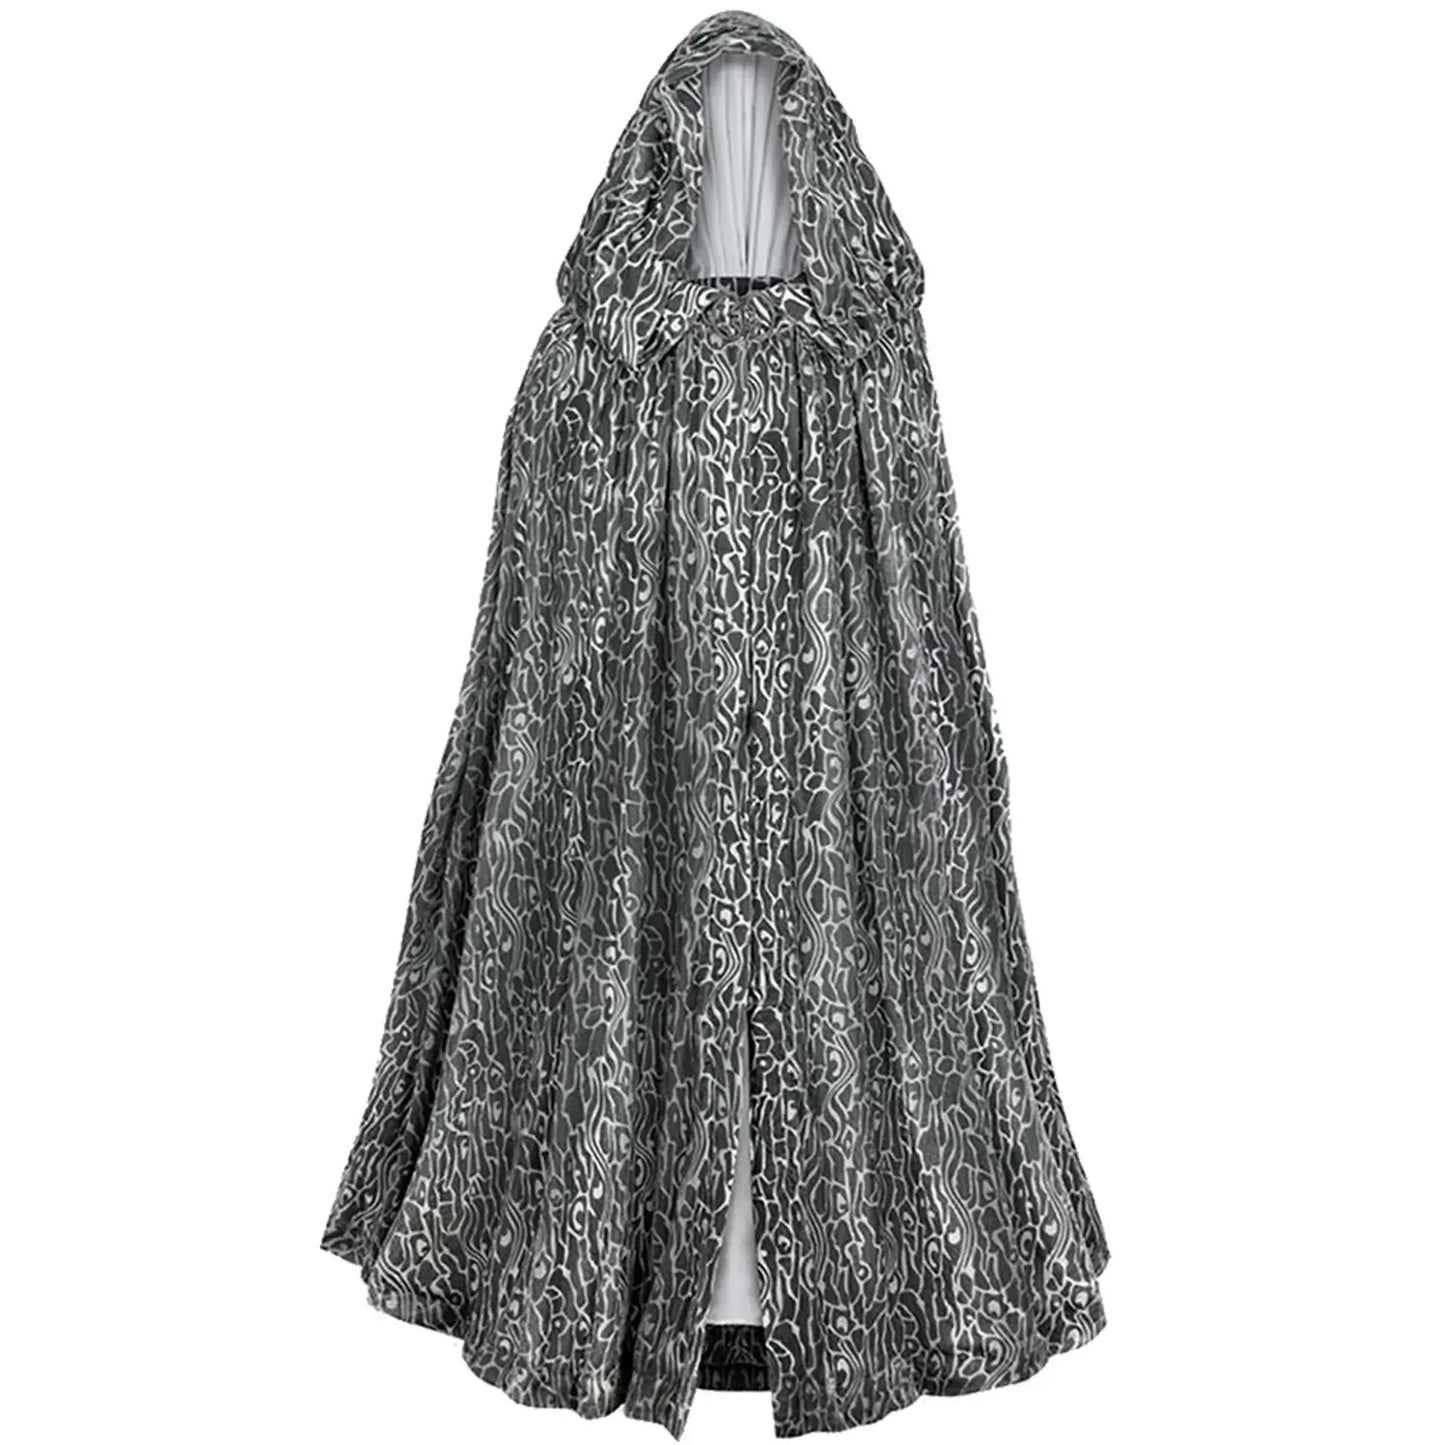 Padme Costume Tatooine Two-piece Padme Amidala Fantasia Cloak Movie Space Battle Disguise Outfit